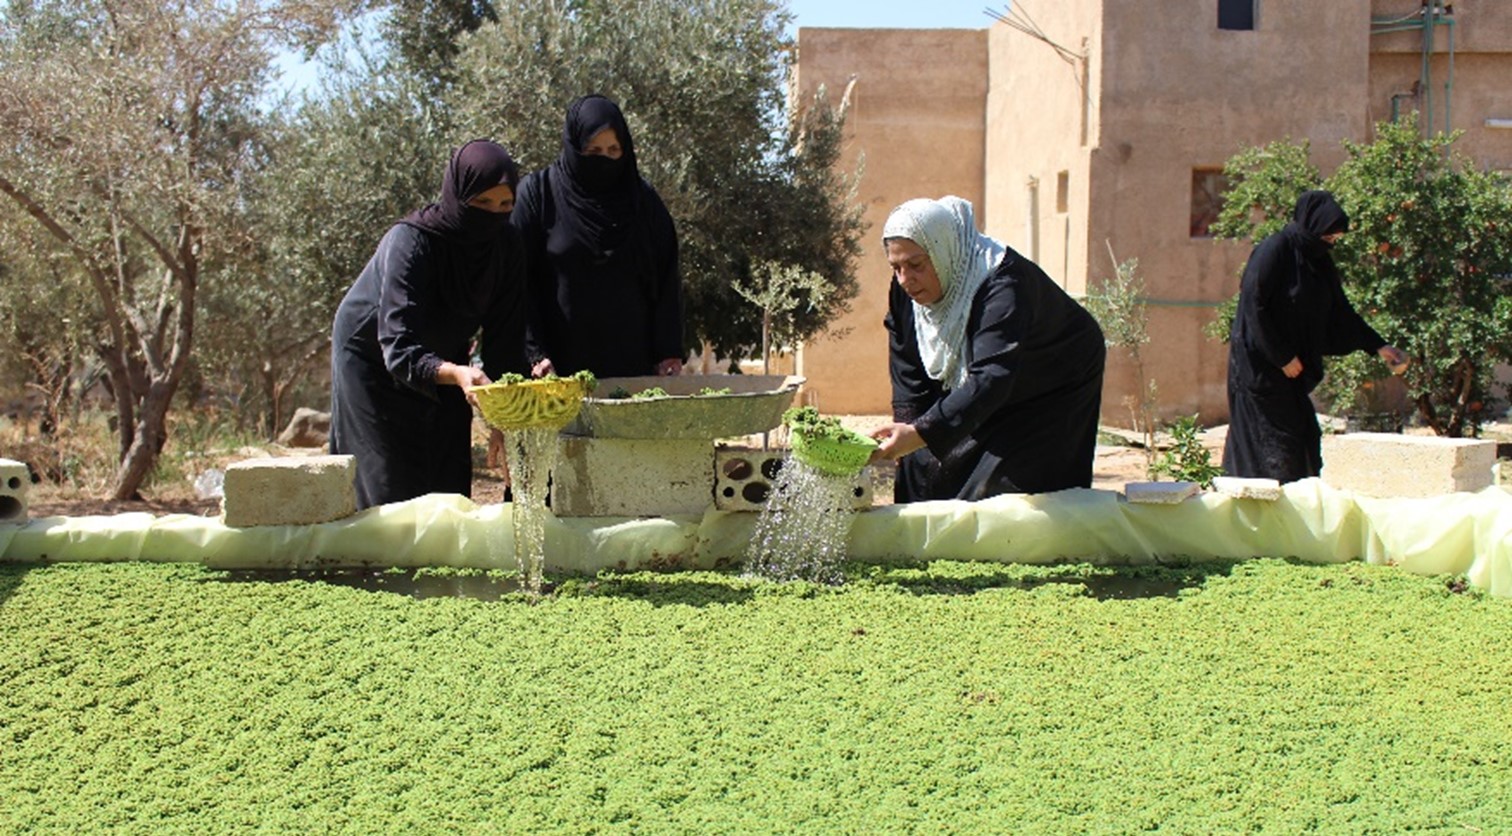 Jordan: Women's economic empowerment through azolla farming